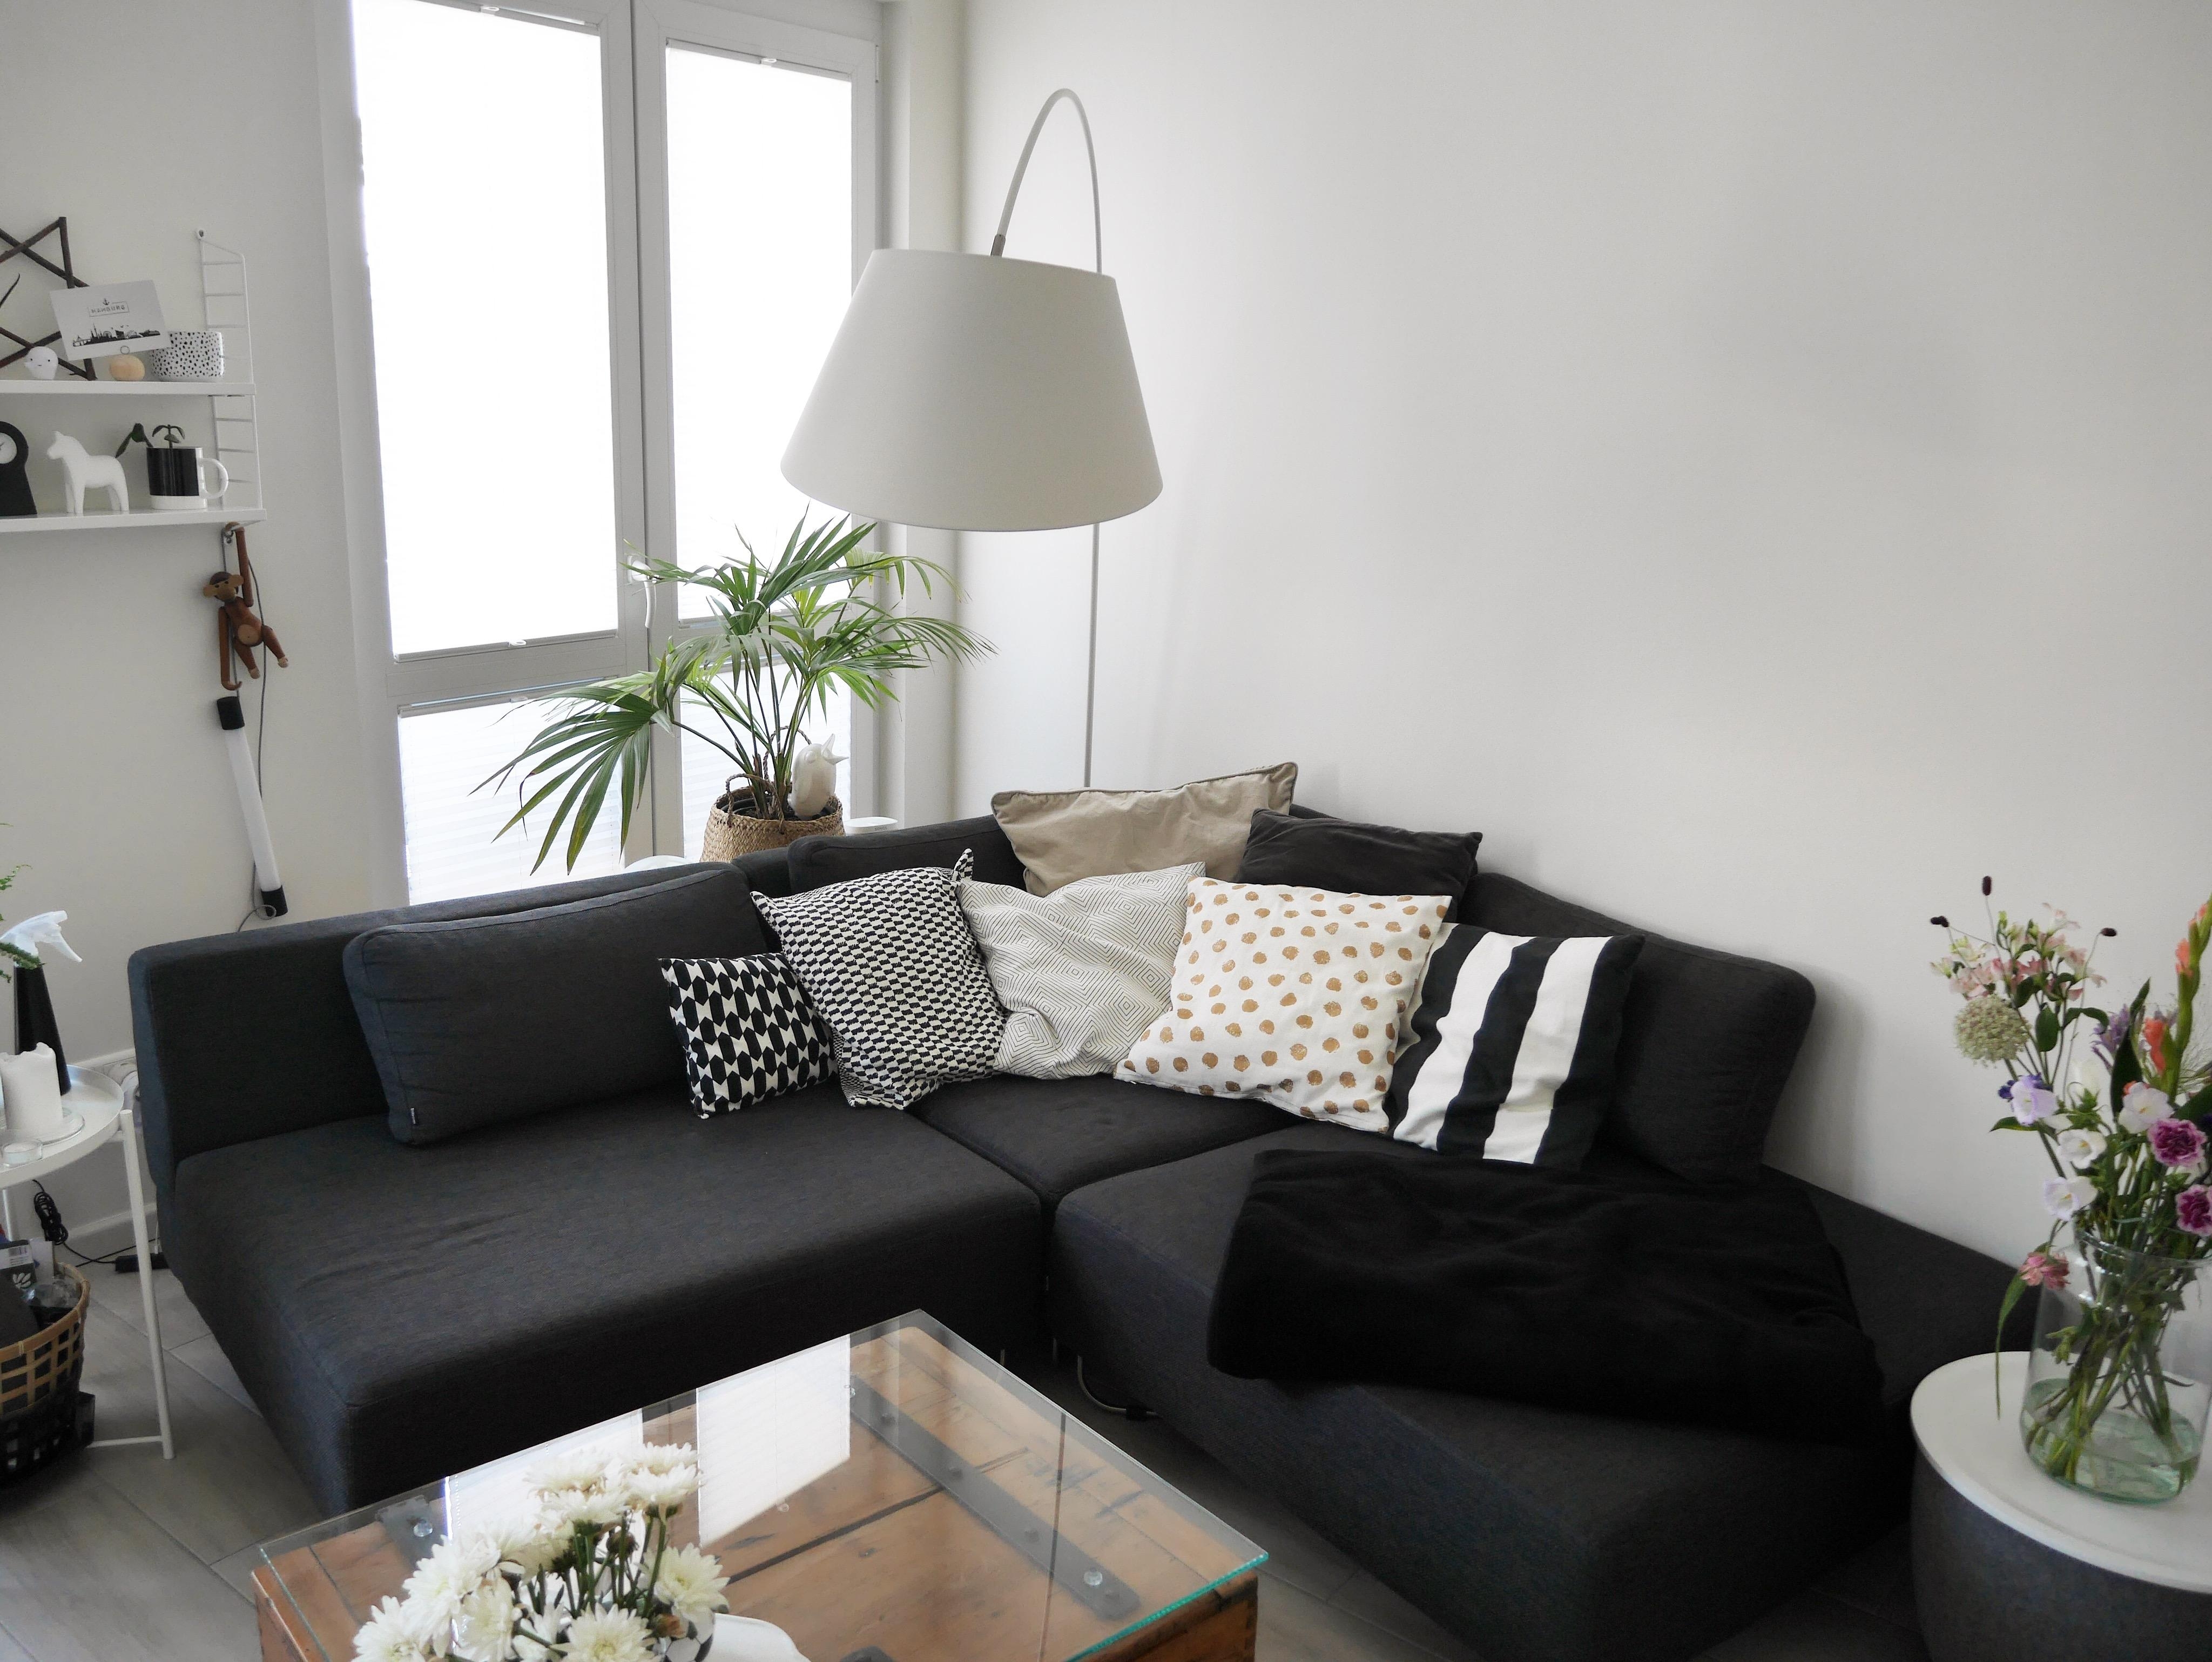 Die Kissengang hat Zuwachs bekommen! #cushions #livingroom #goldendots